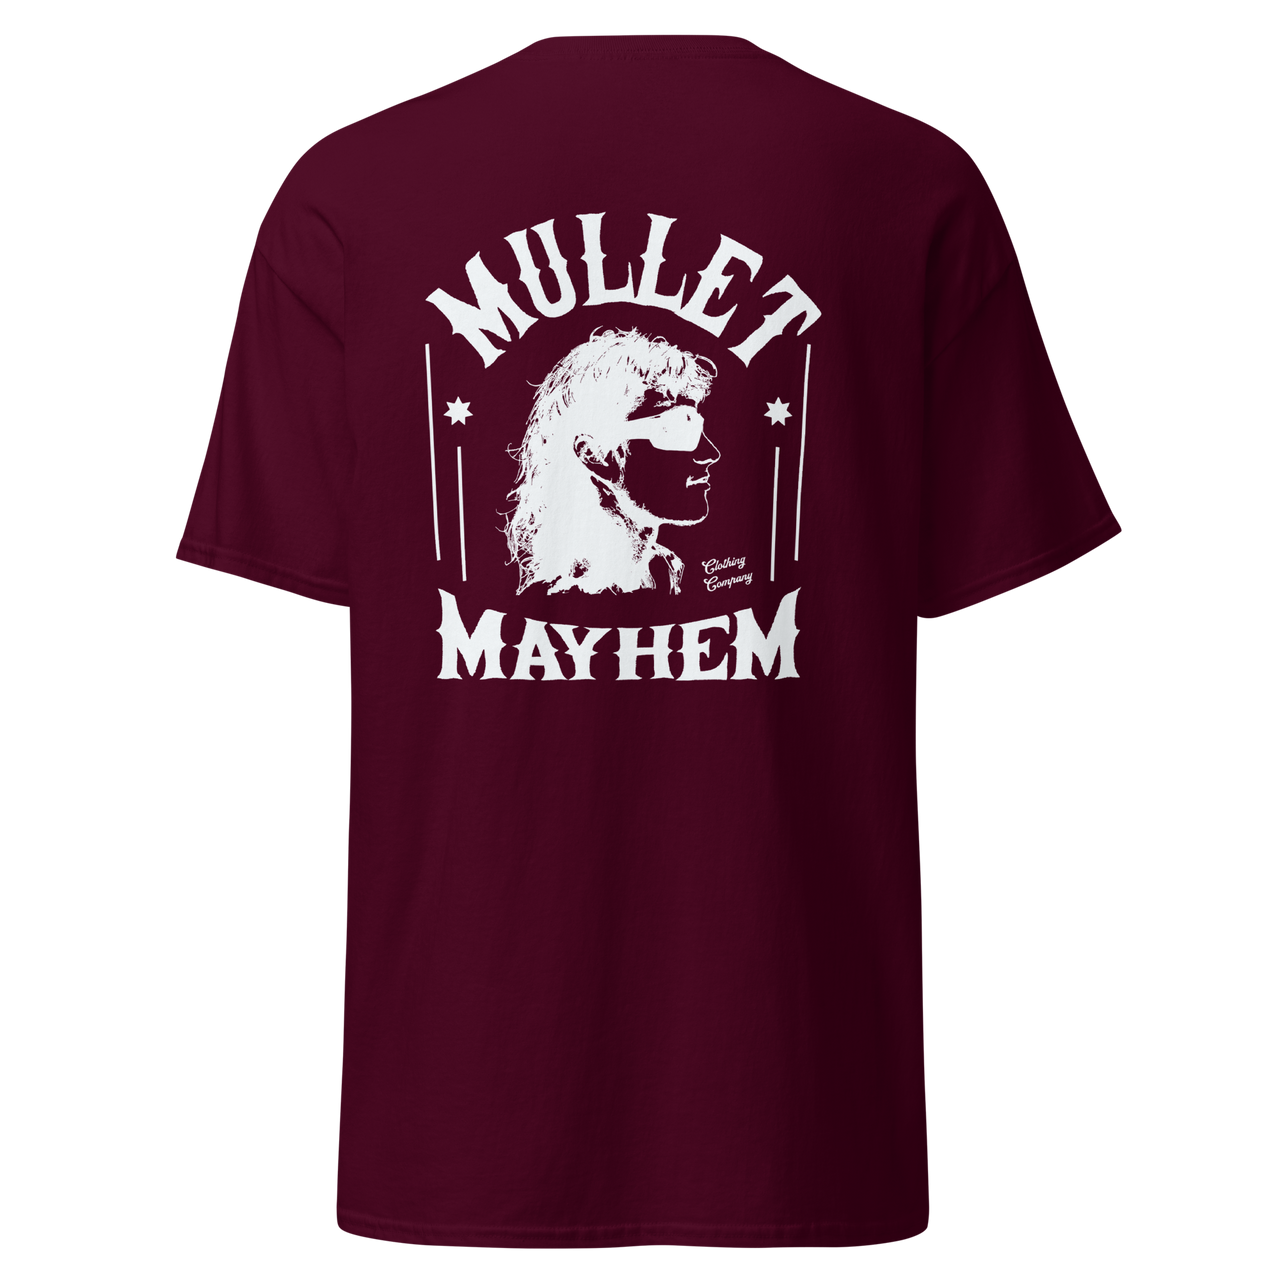 Kombo Mullet Mayhem (t-Shirt)